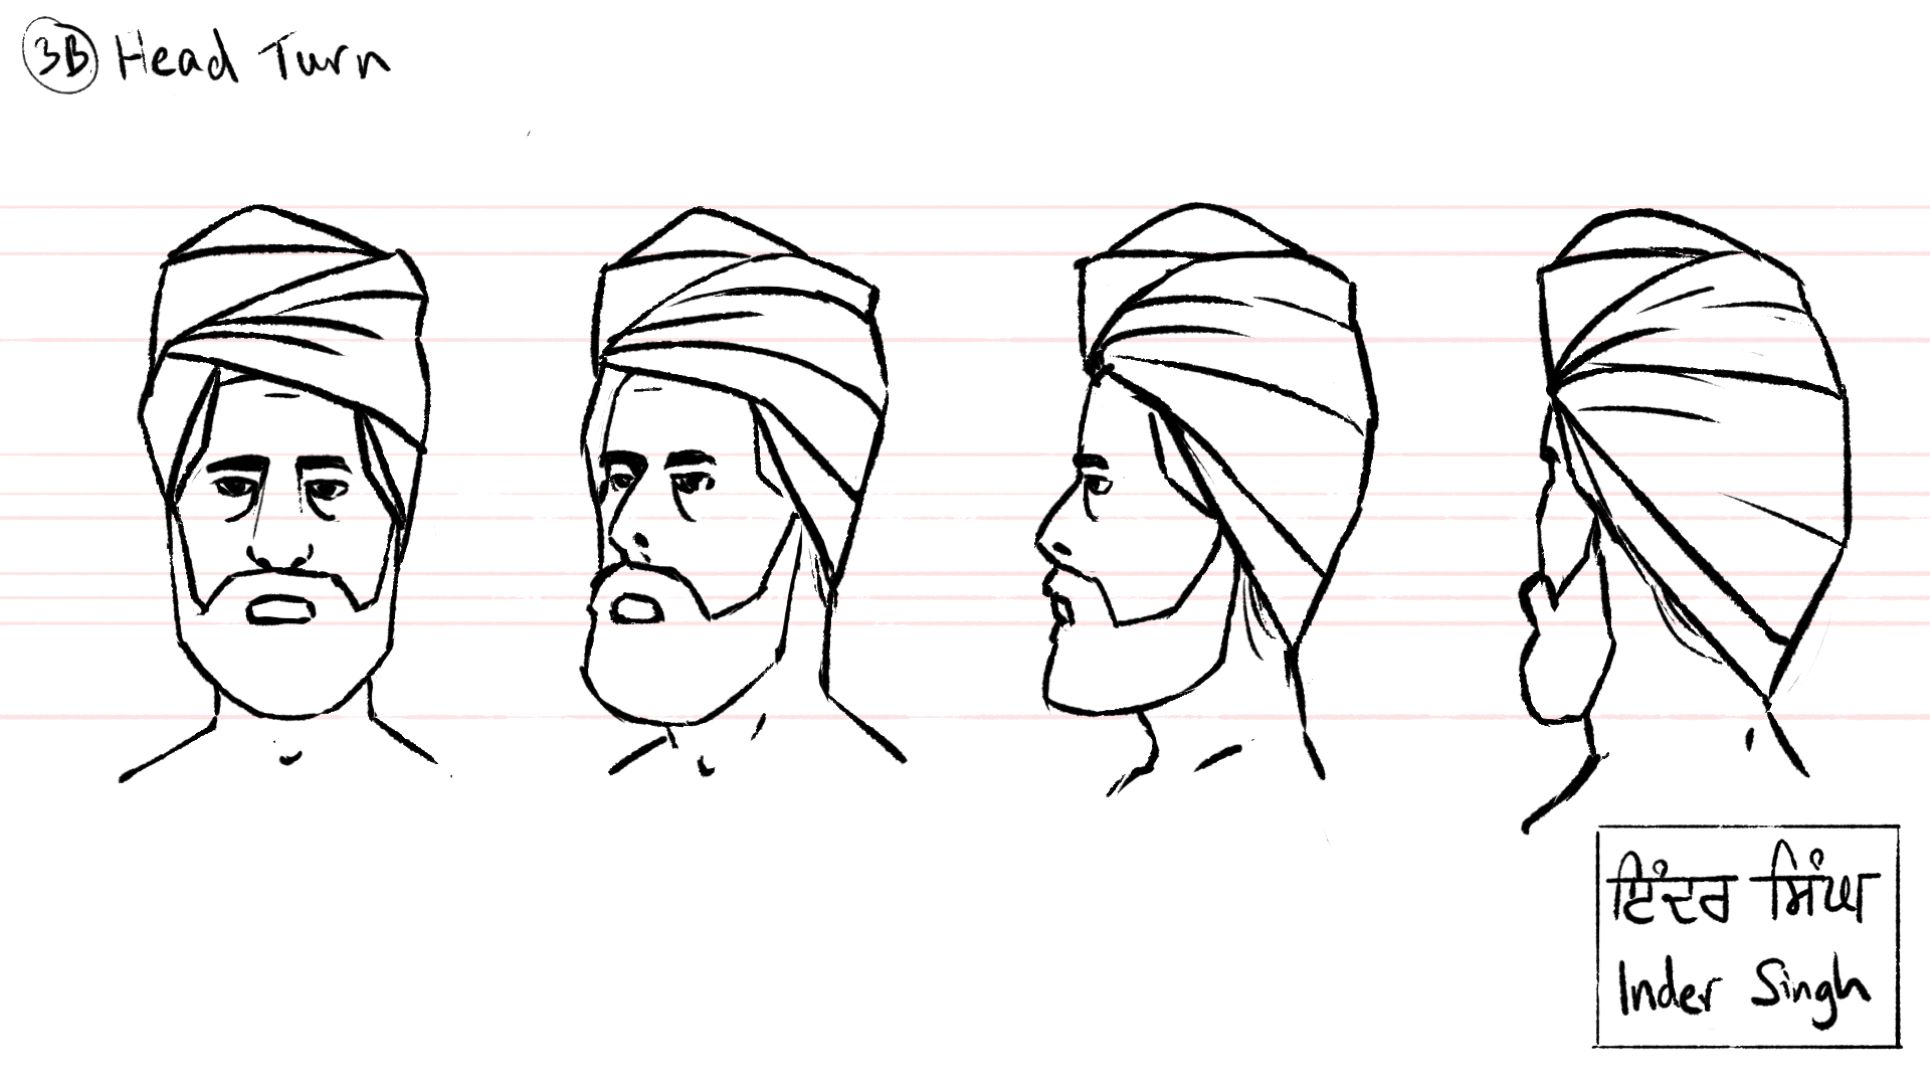 Character Head Turn - With Turban